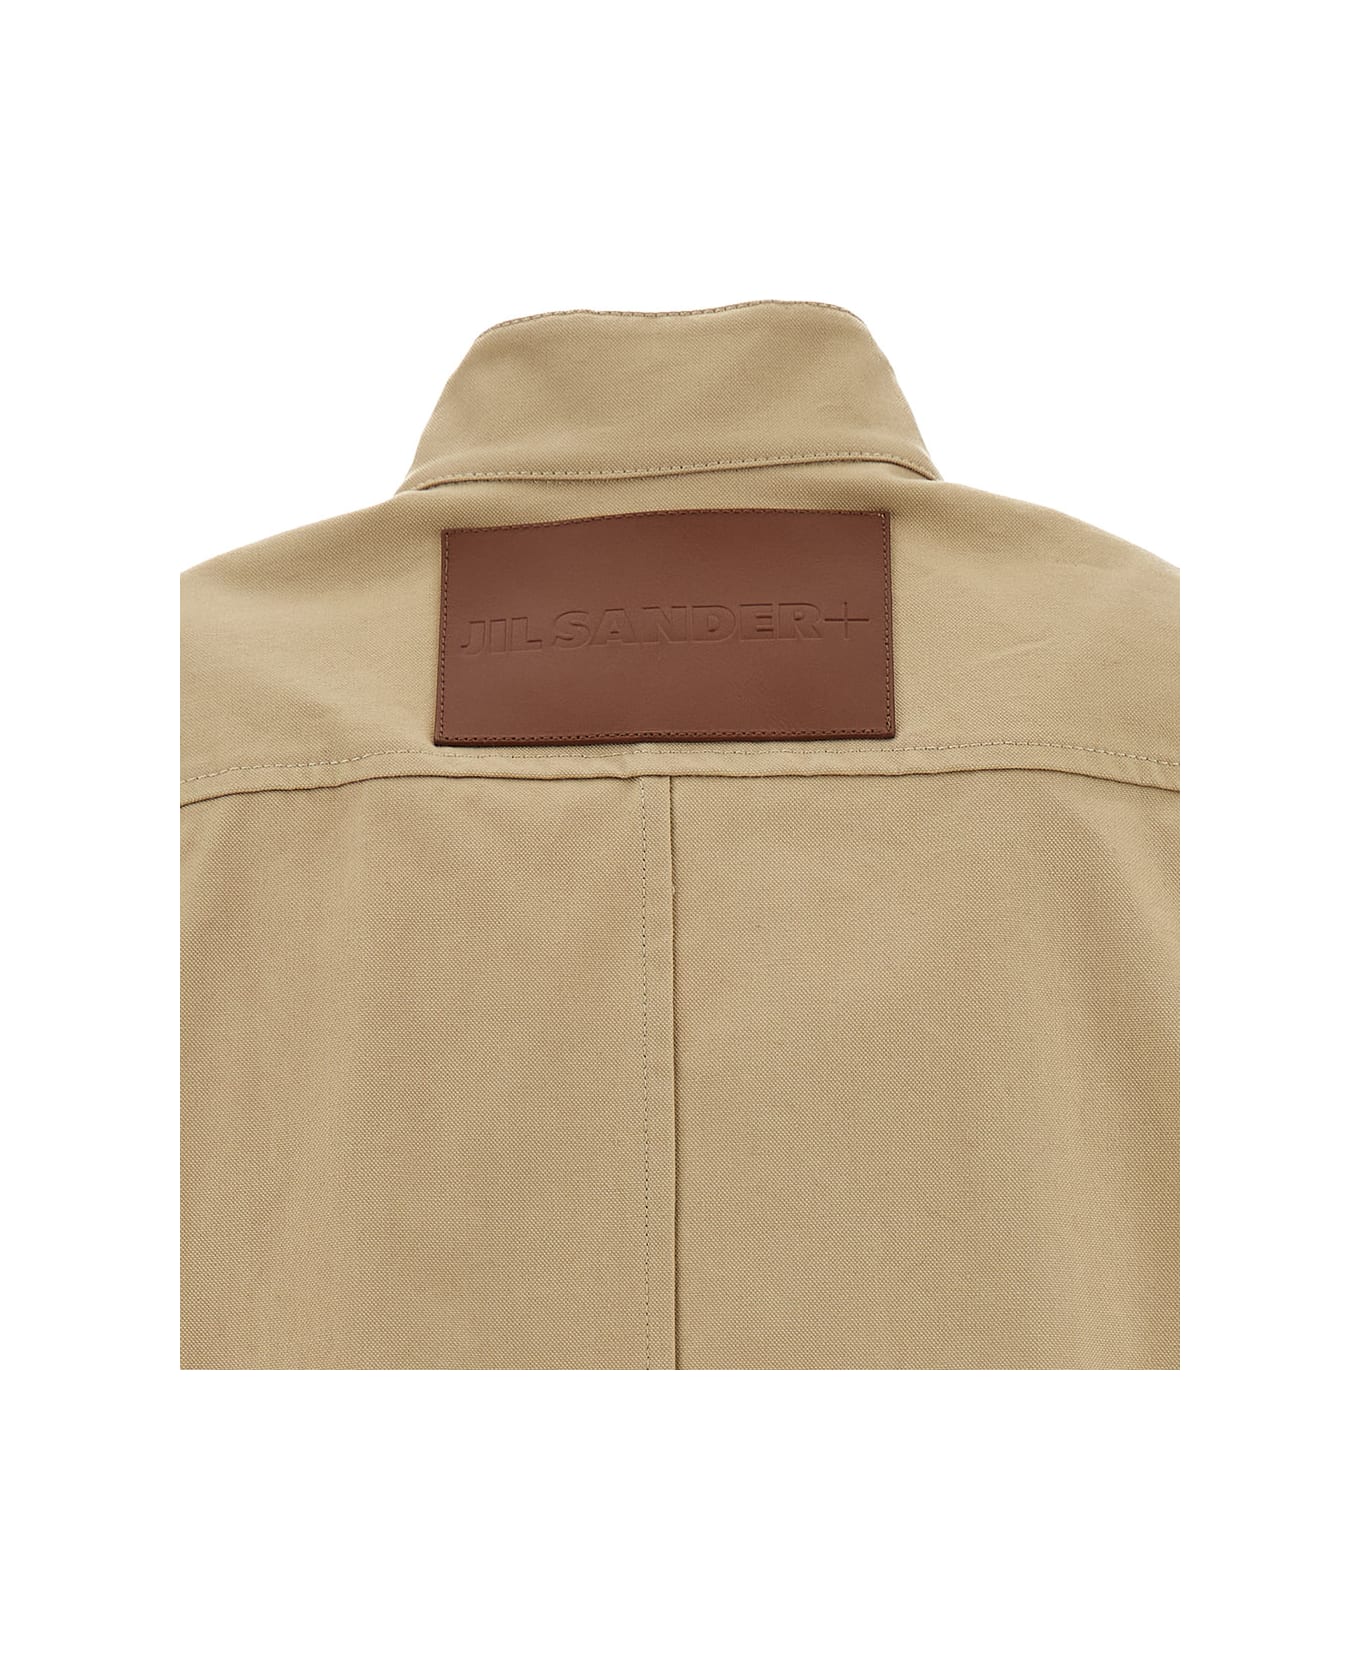 Jil Sander Beige Jacket With Leather Logo Patch In Cotton Canvas Woman - Beige ジャケット